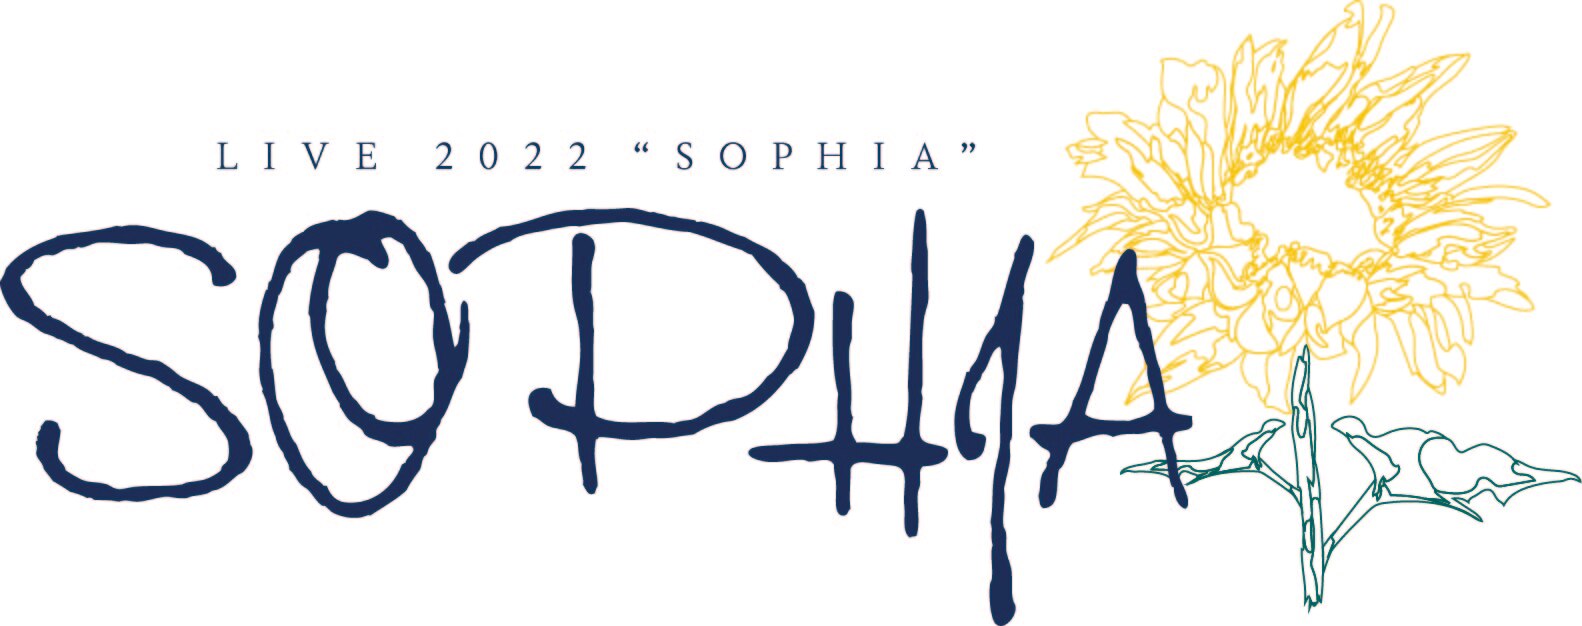 SOPHIA LIVE 2022 “SOPHIA” 7zoo7/MICHAEL/Run through life先行受付の